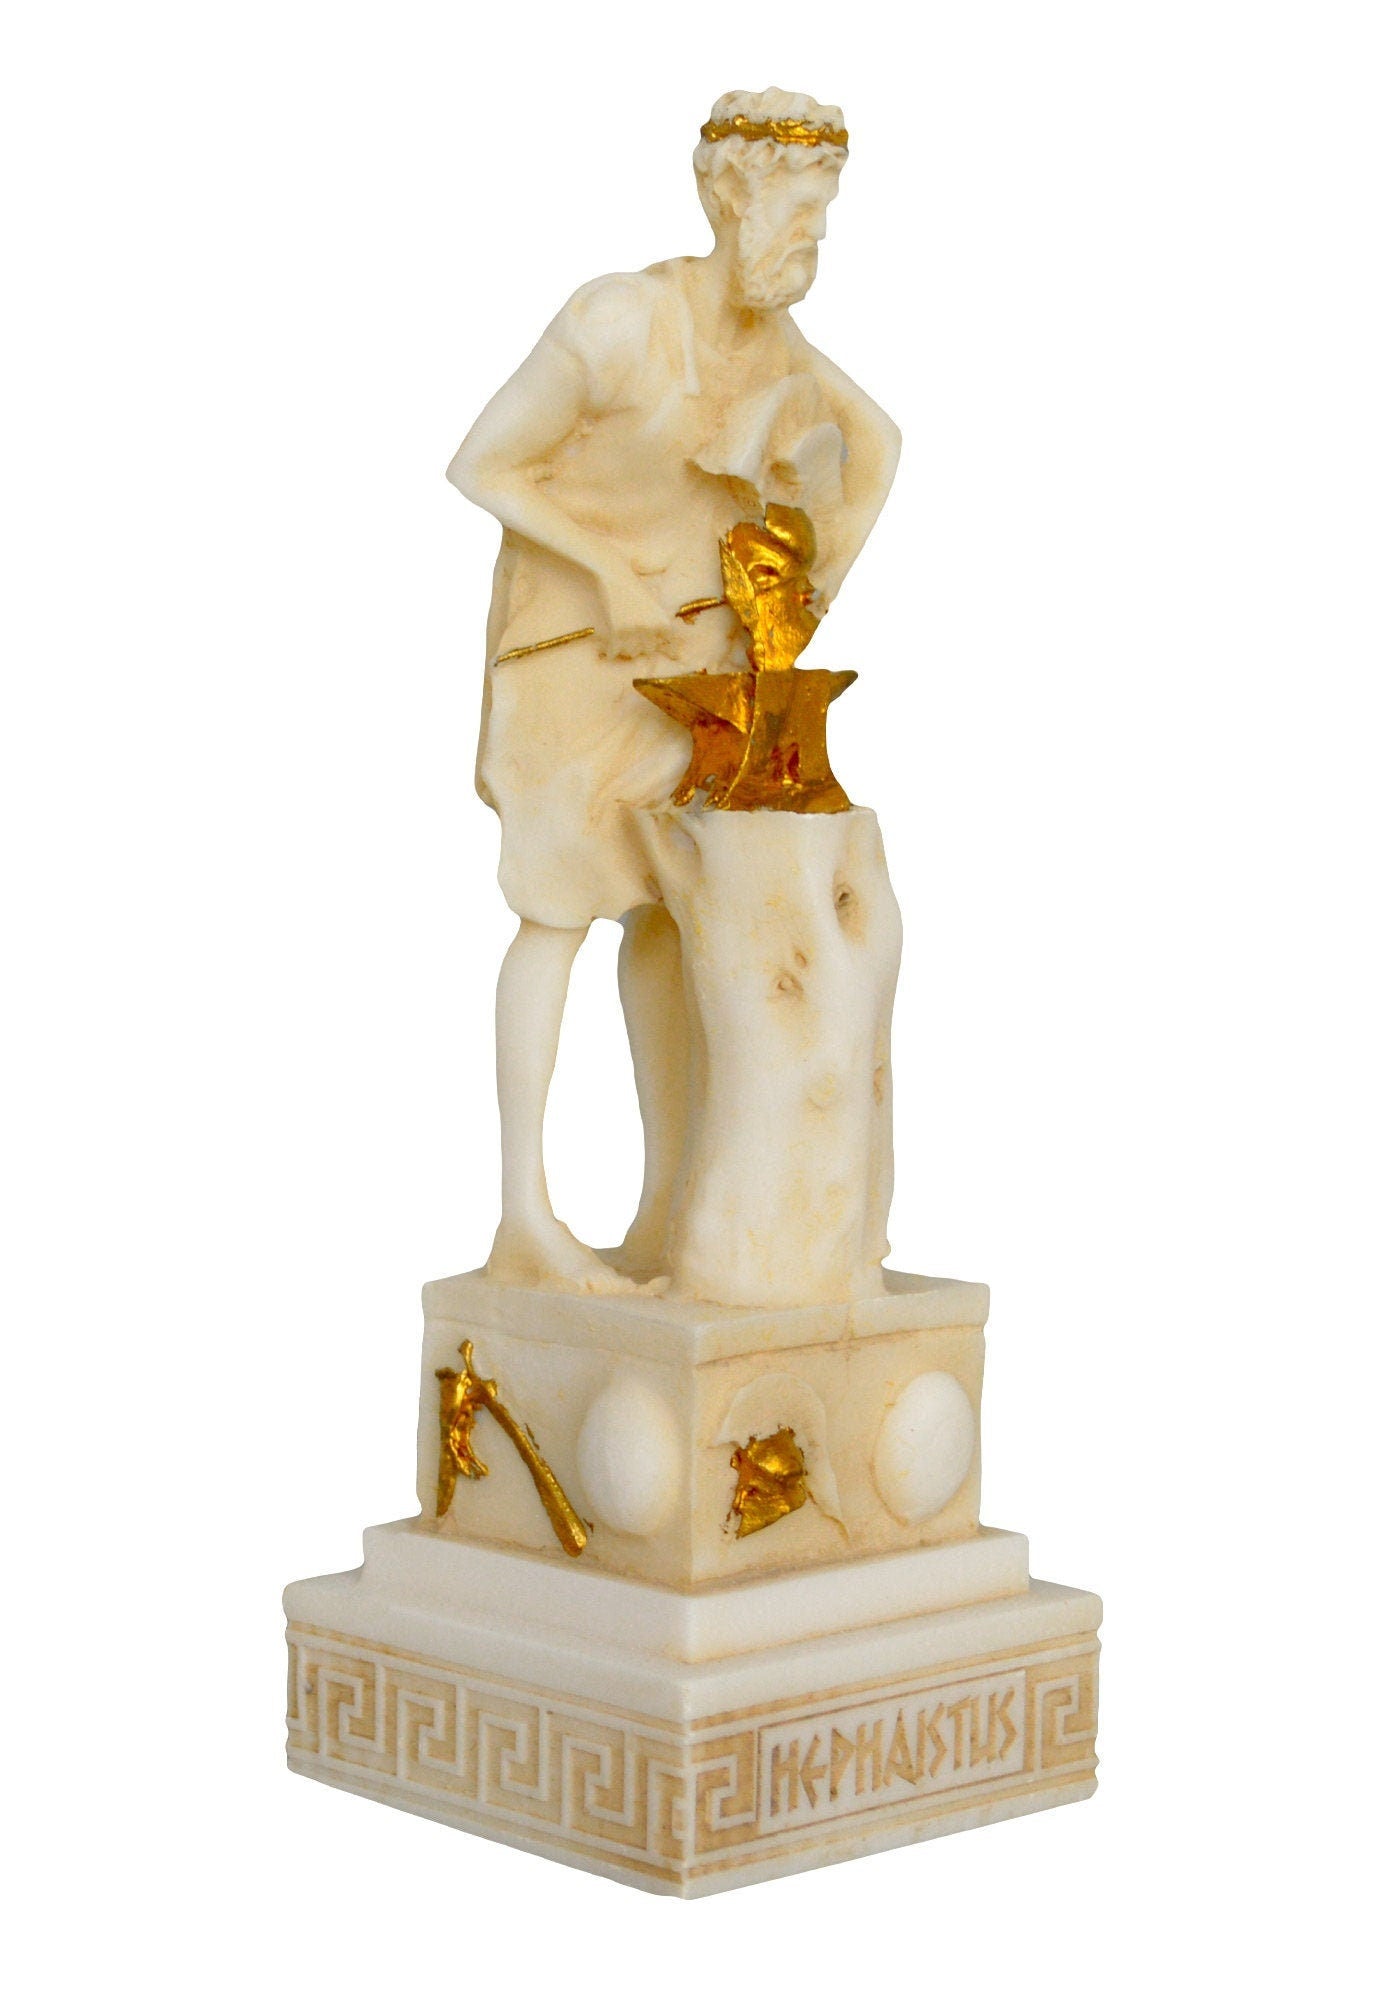 Hephaestus Vulcan - Greek Roman God of Blacksmiths, Metalworking, Craftsmen, Artisans, Fire and Volcanoes -  Aged Alabaster Statue